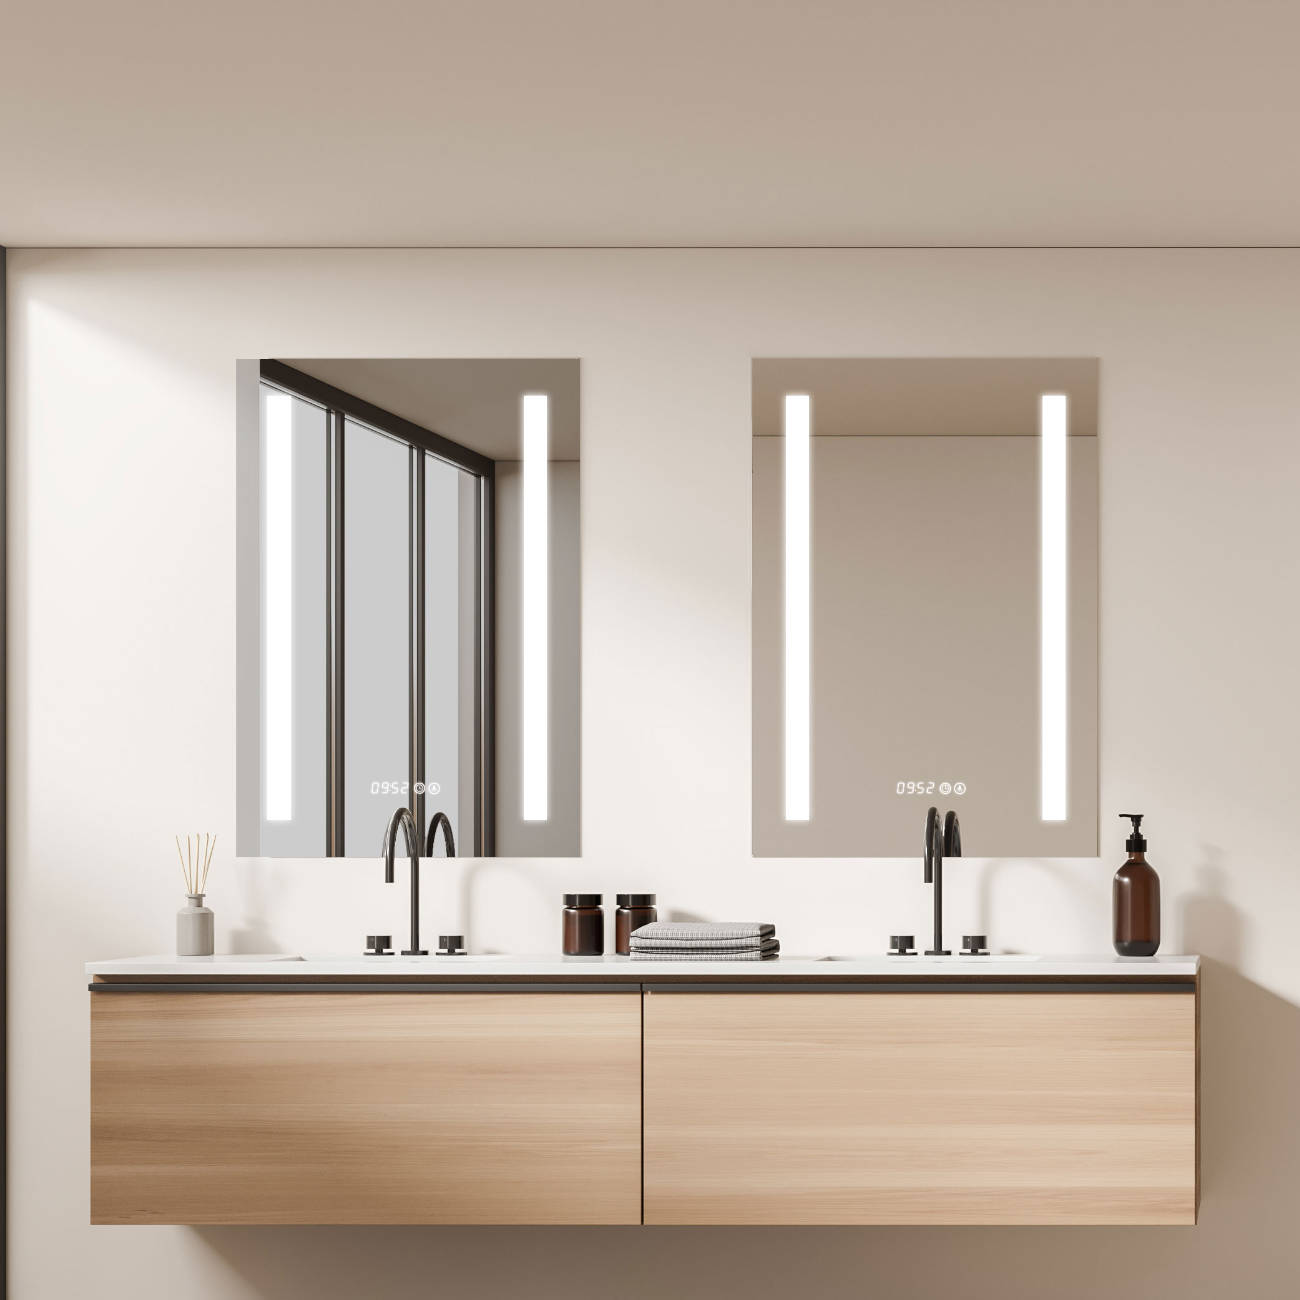 LED Badspiegel, design Badpiegel, Badspiegel mit led Beleuchtung